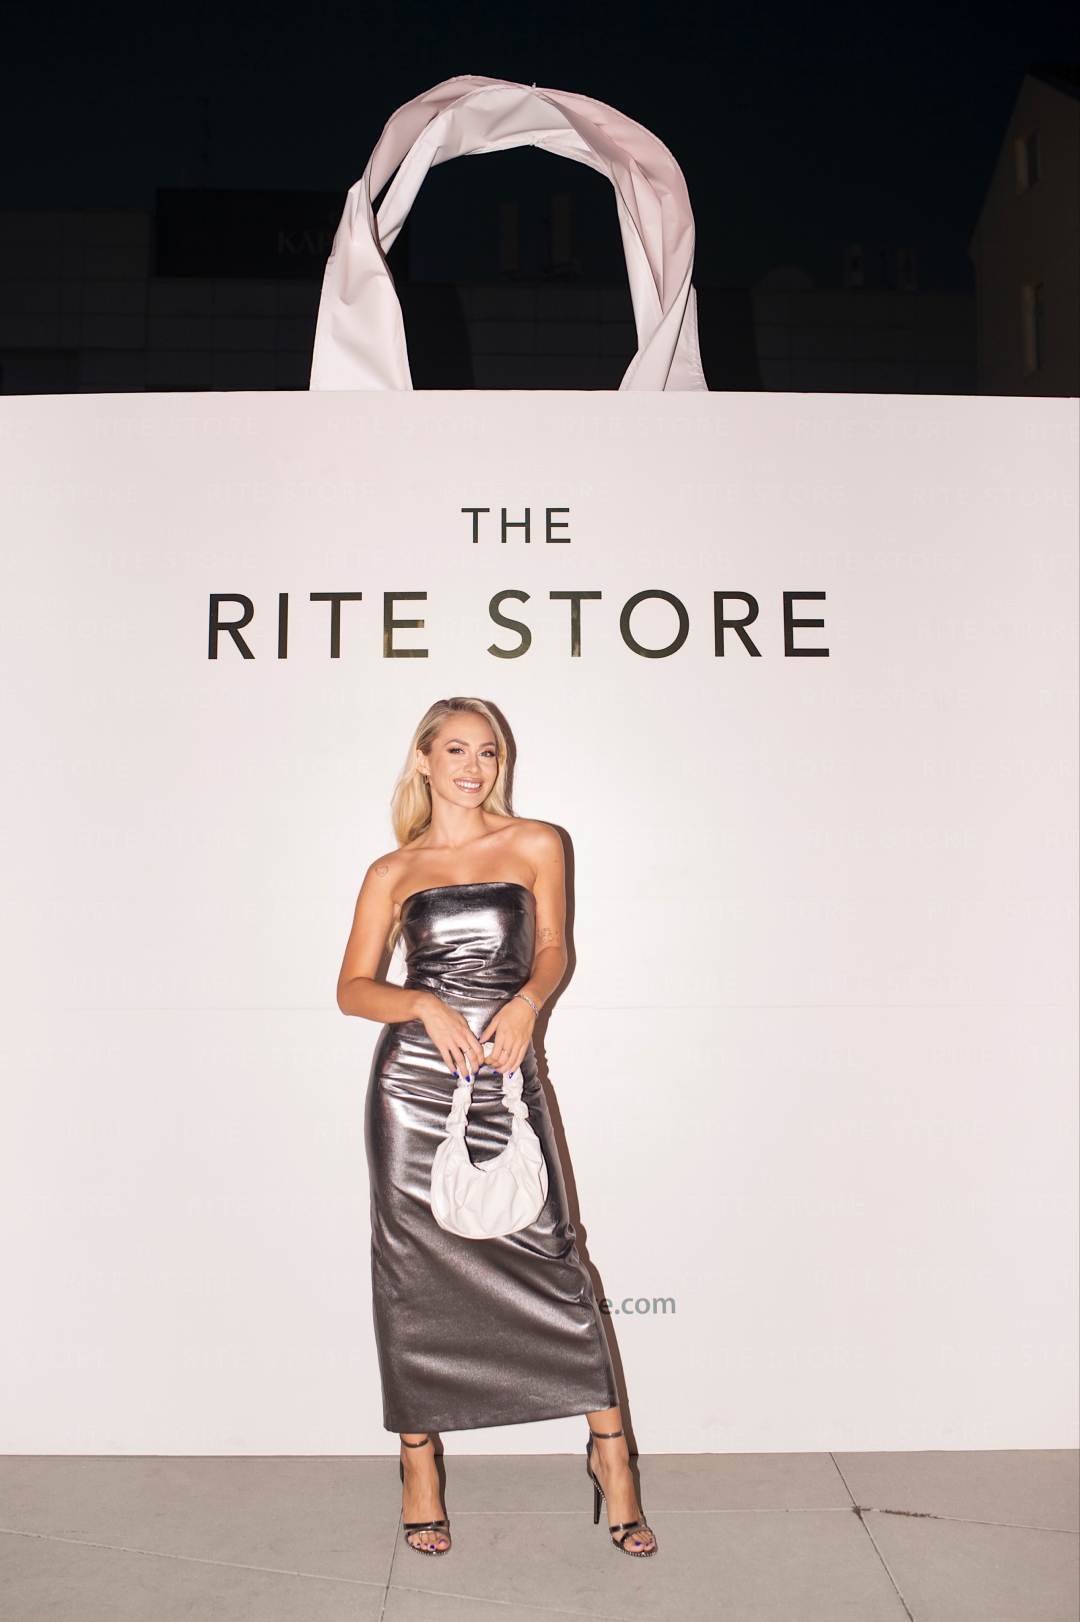 The Rite store